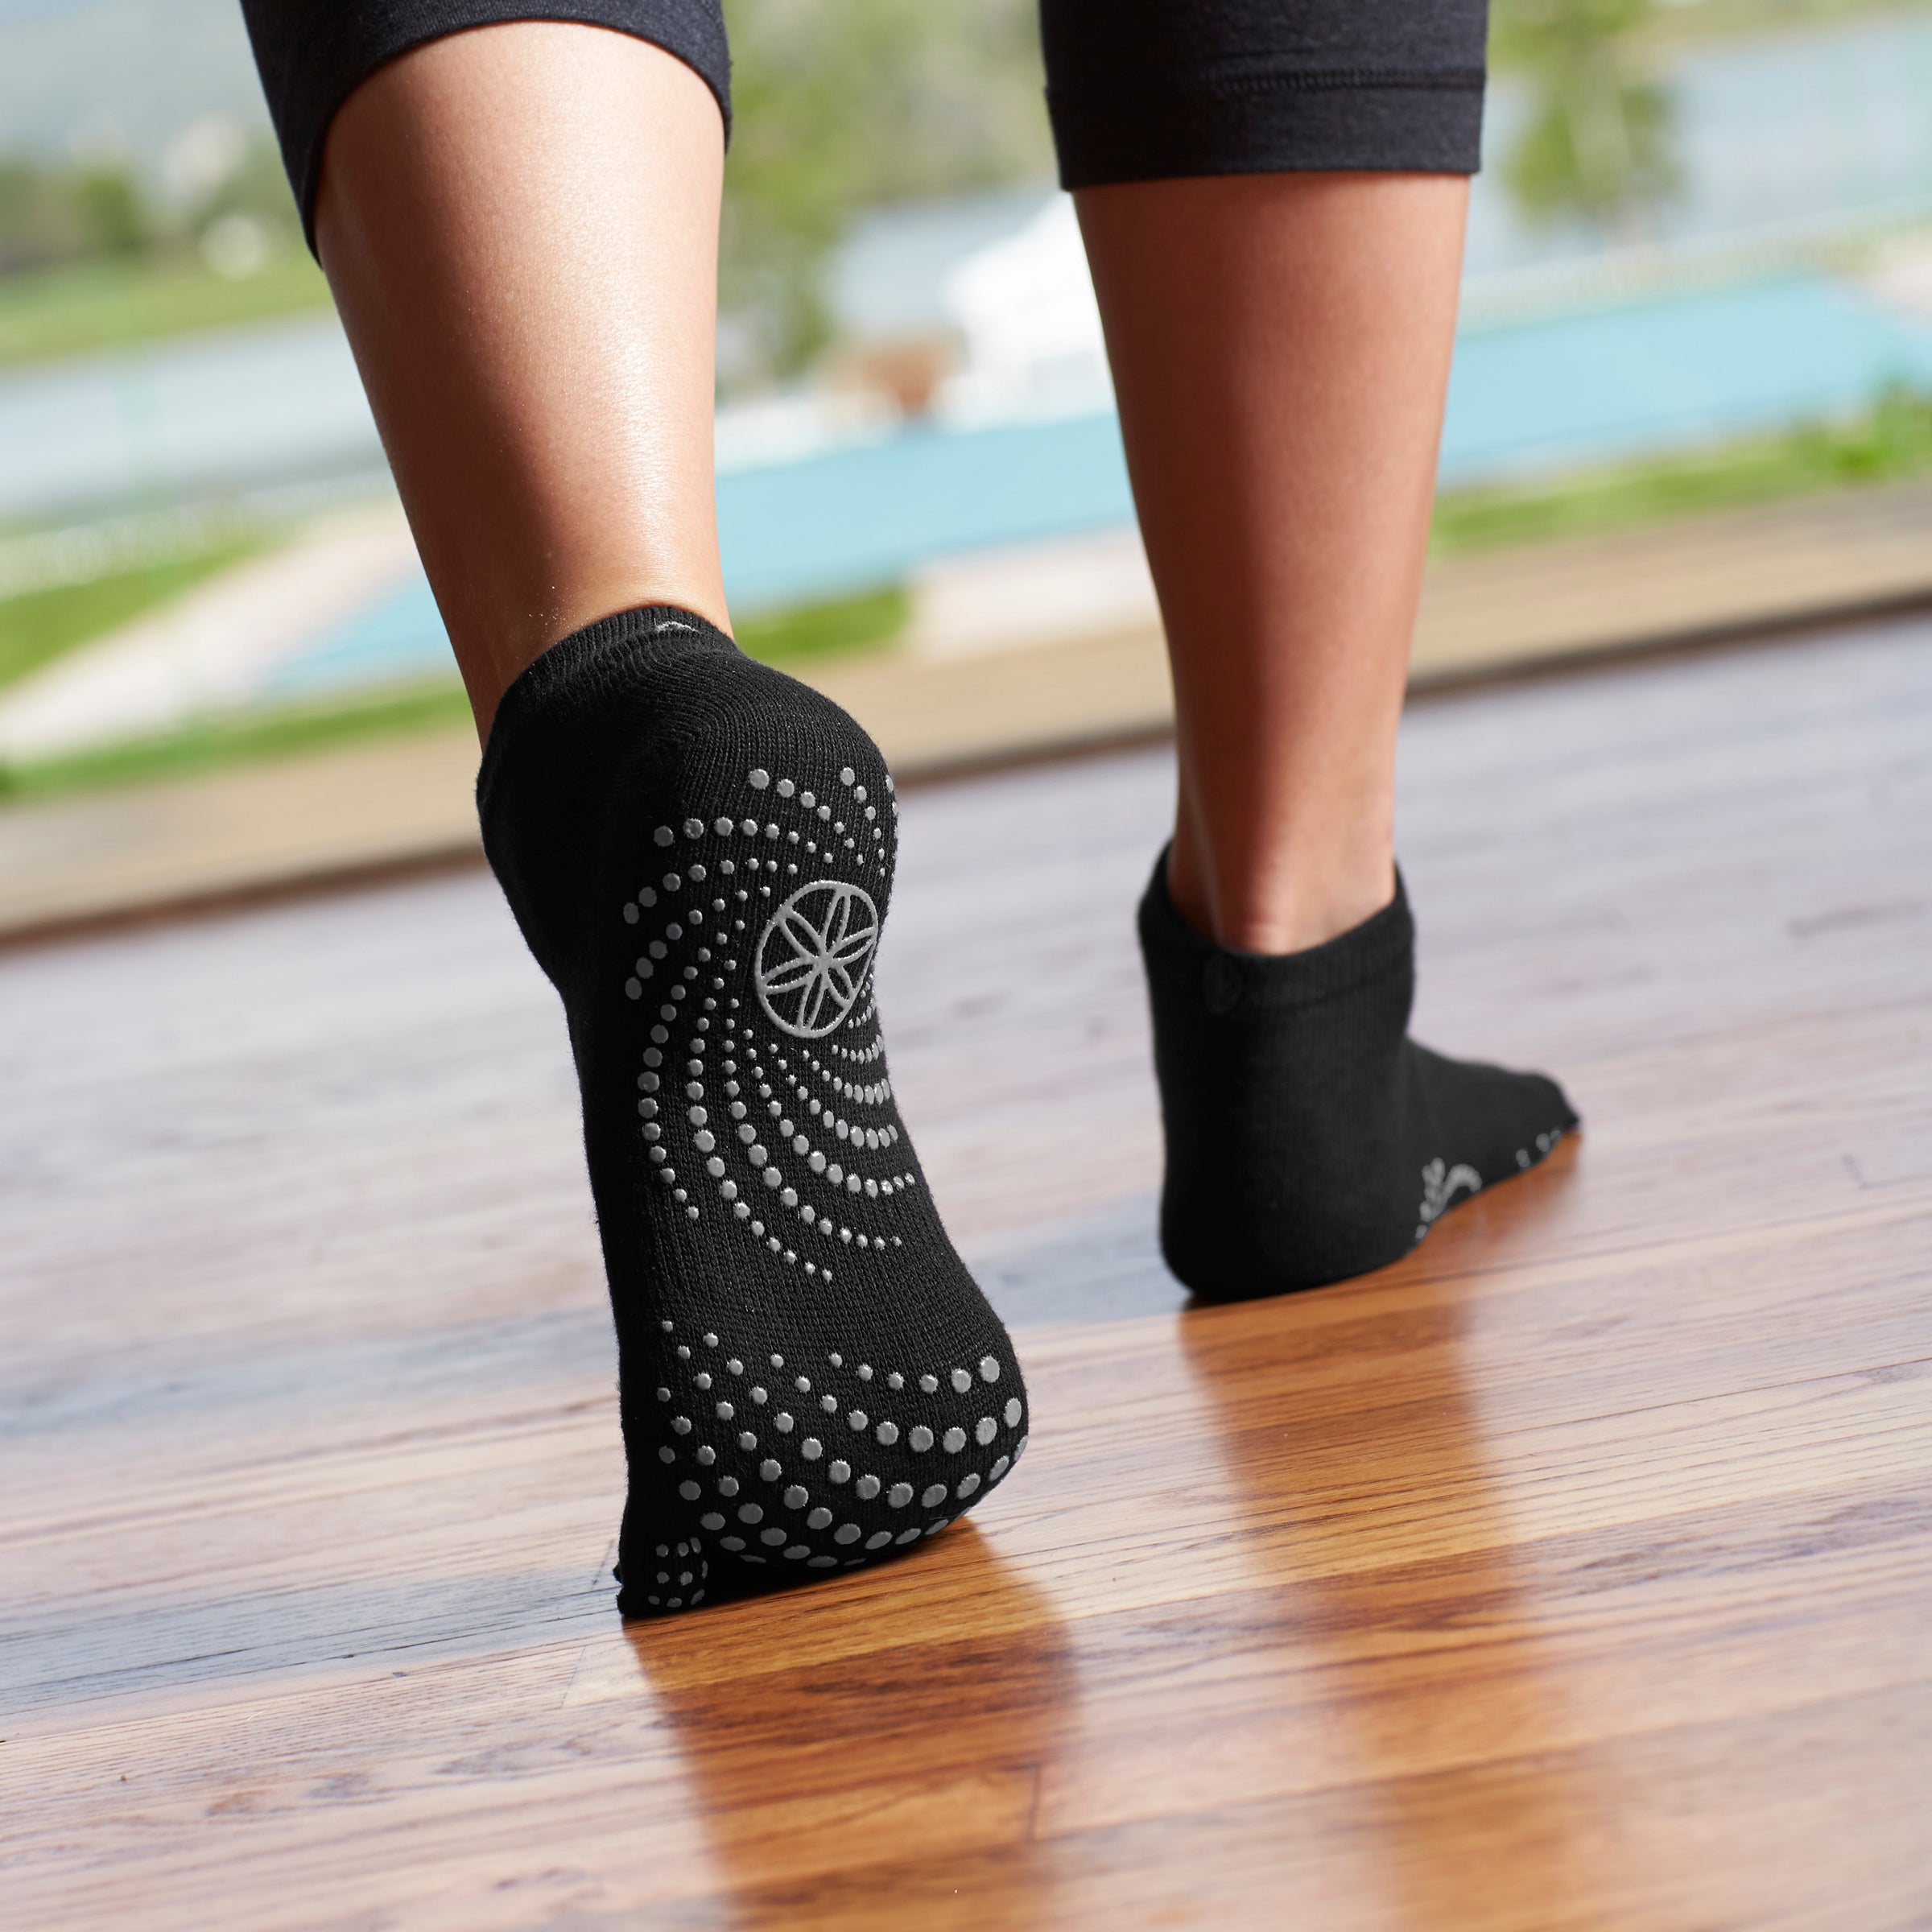 GAIAM Grippy Yoga Socks - Pink, Small/Medium - Ayurveda 101 Online Shop  International